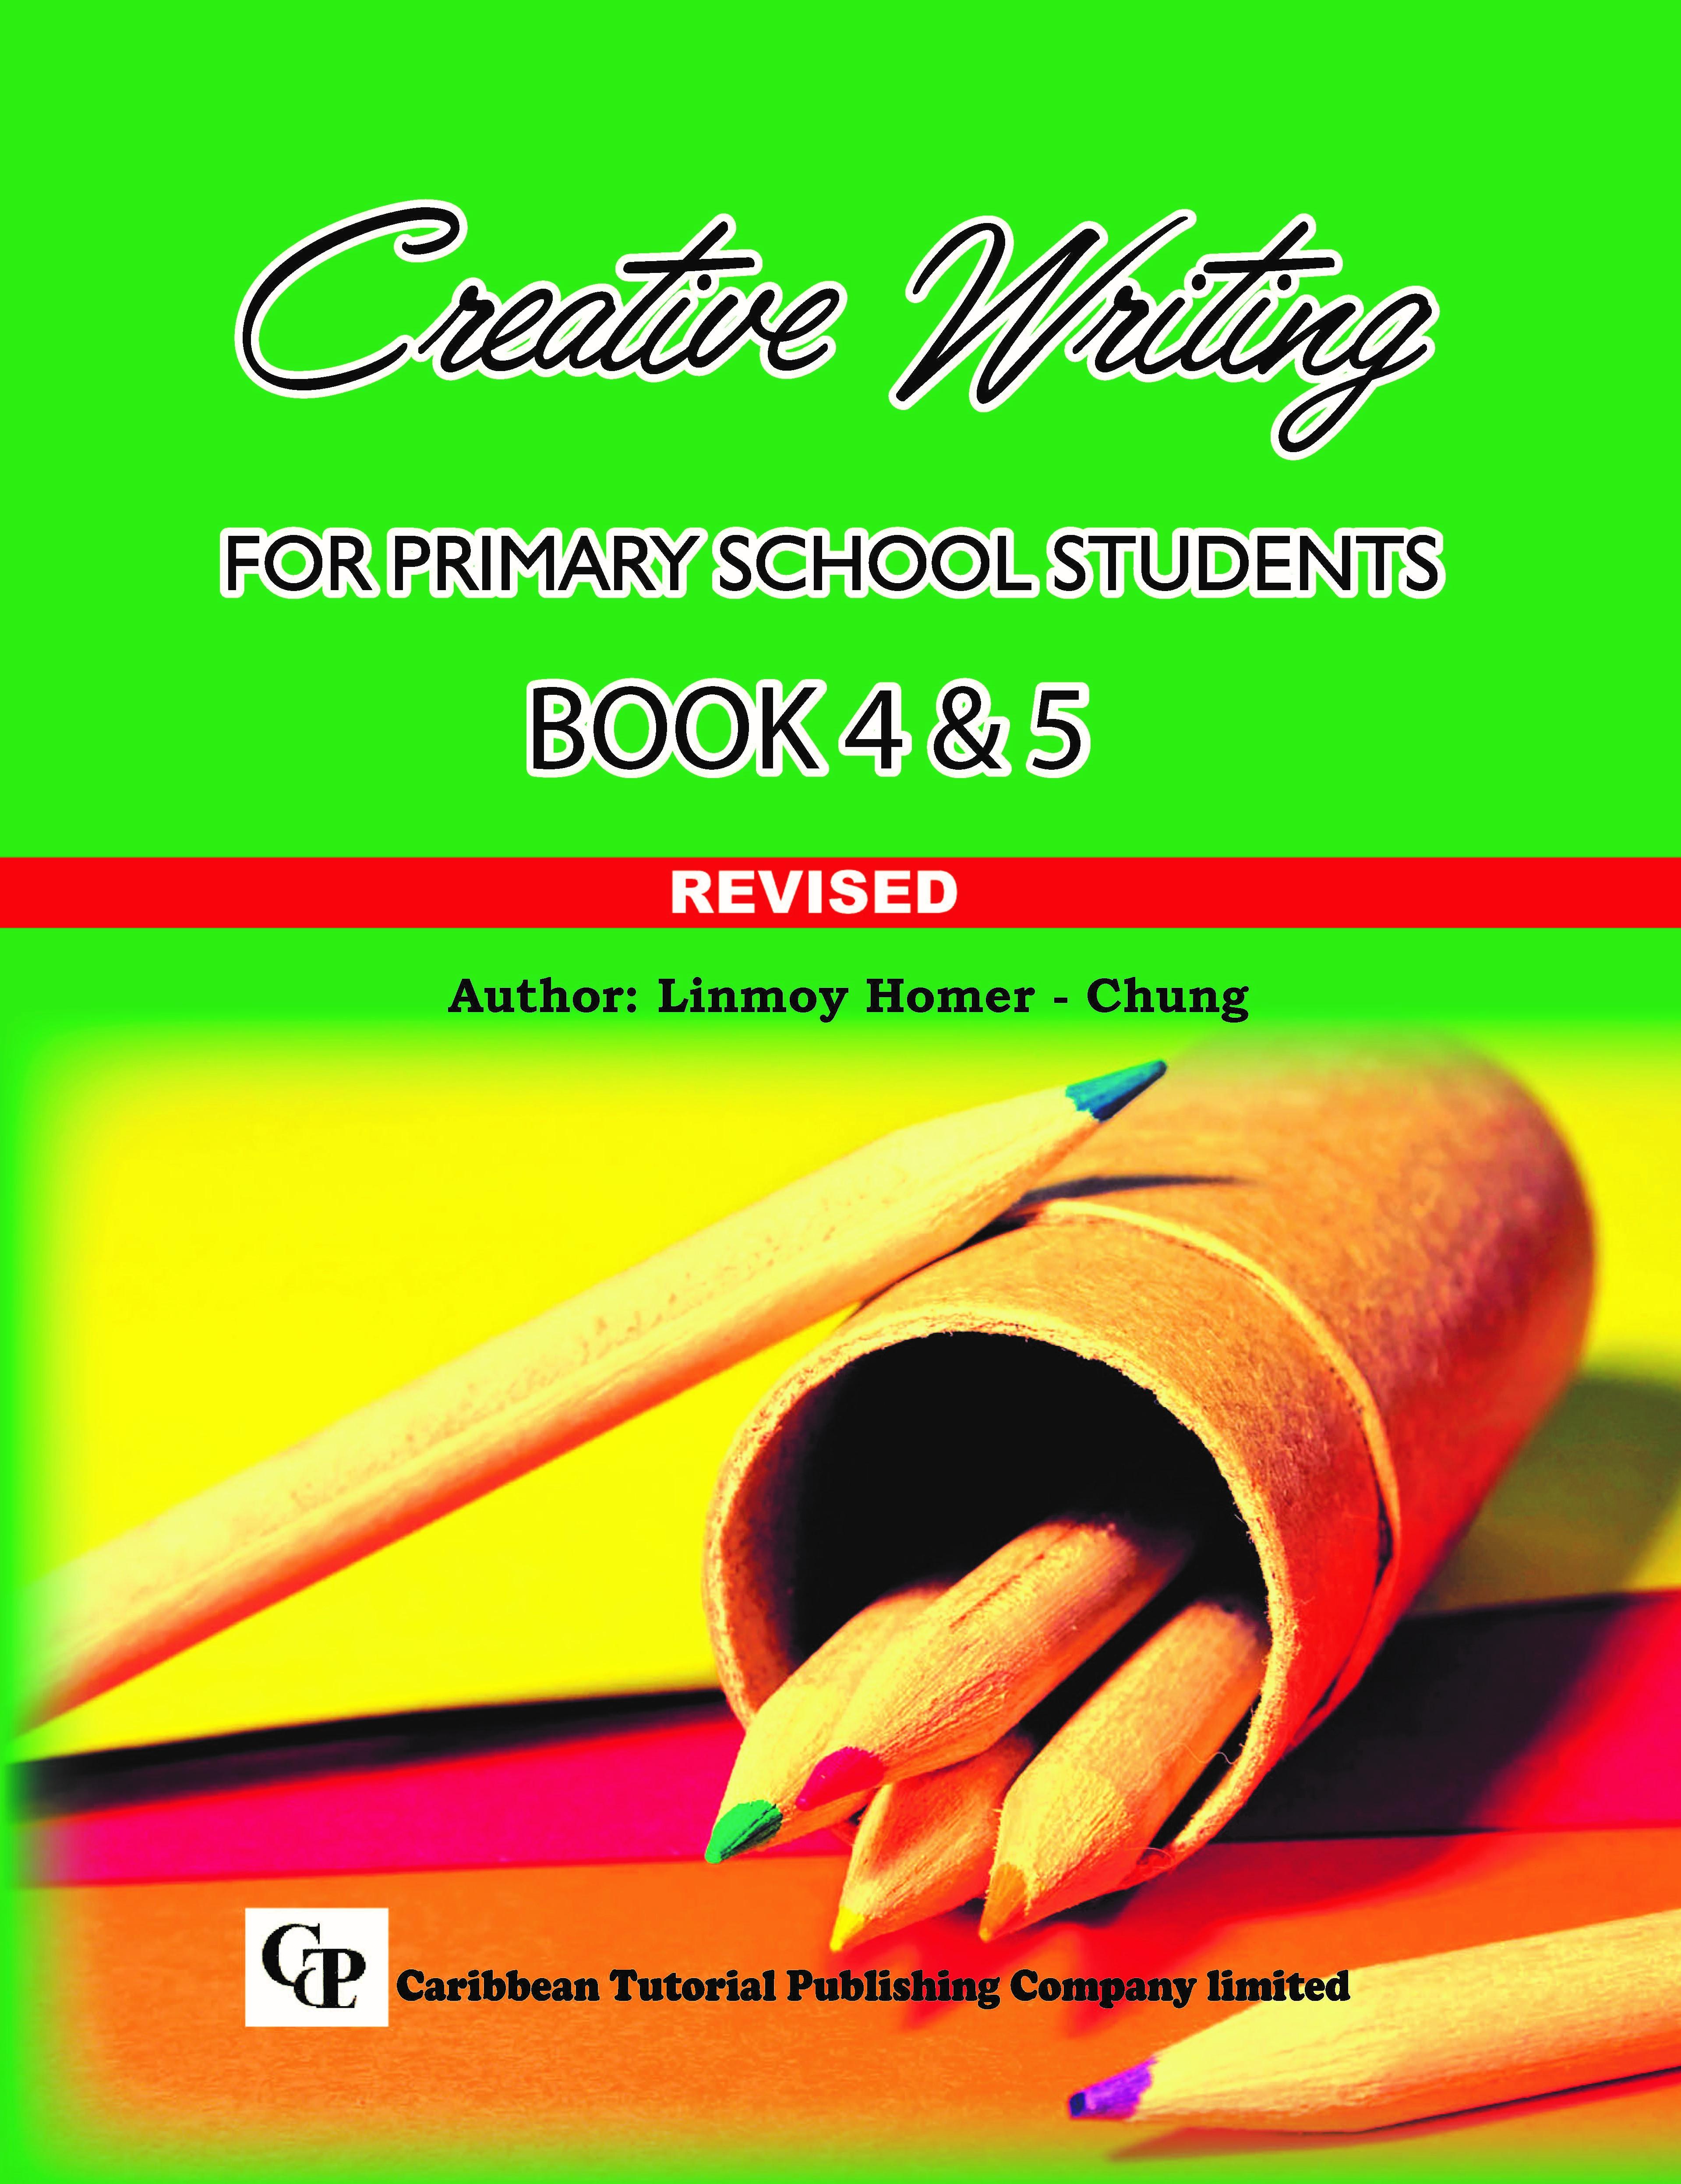 creative writing topics for standard 5